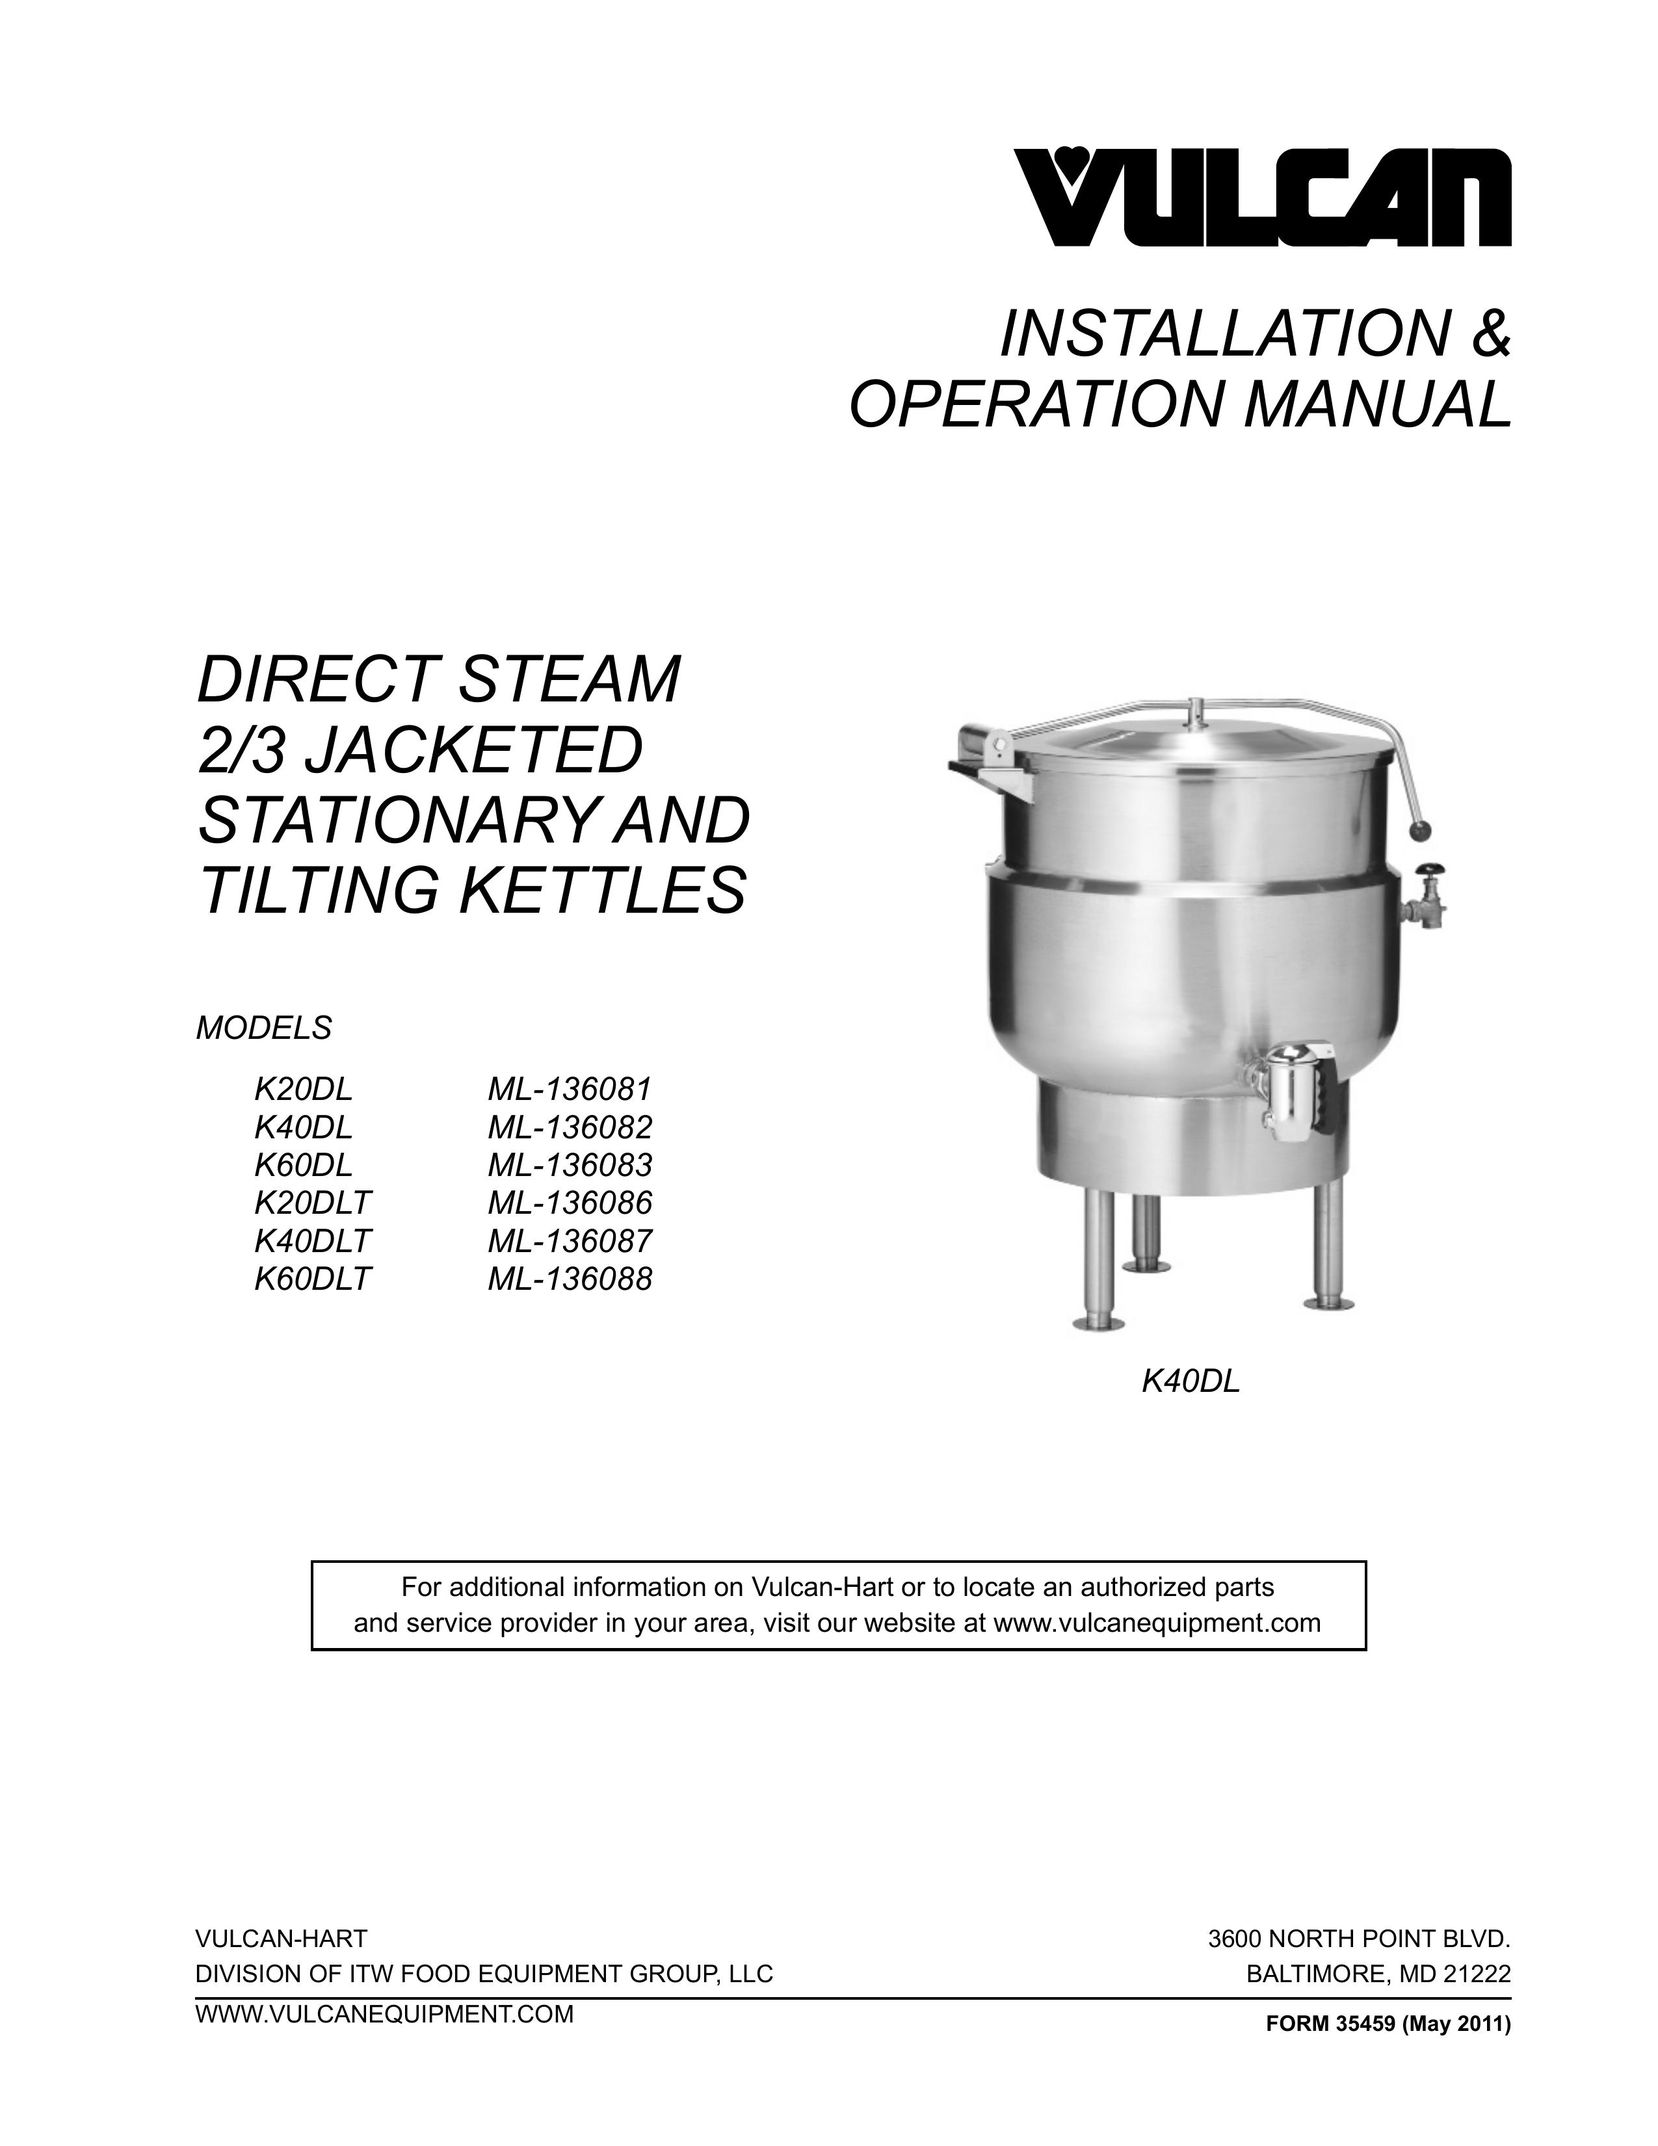 Vulcan-Hart K40DLT Hot Beverage Maker User Manual